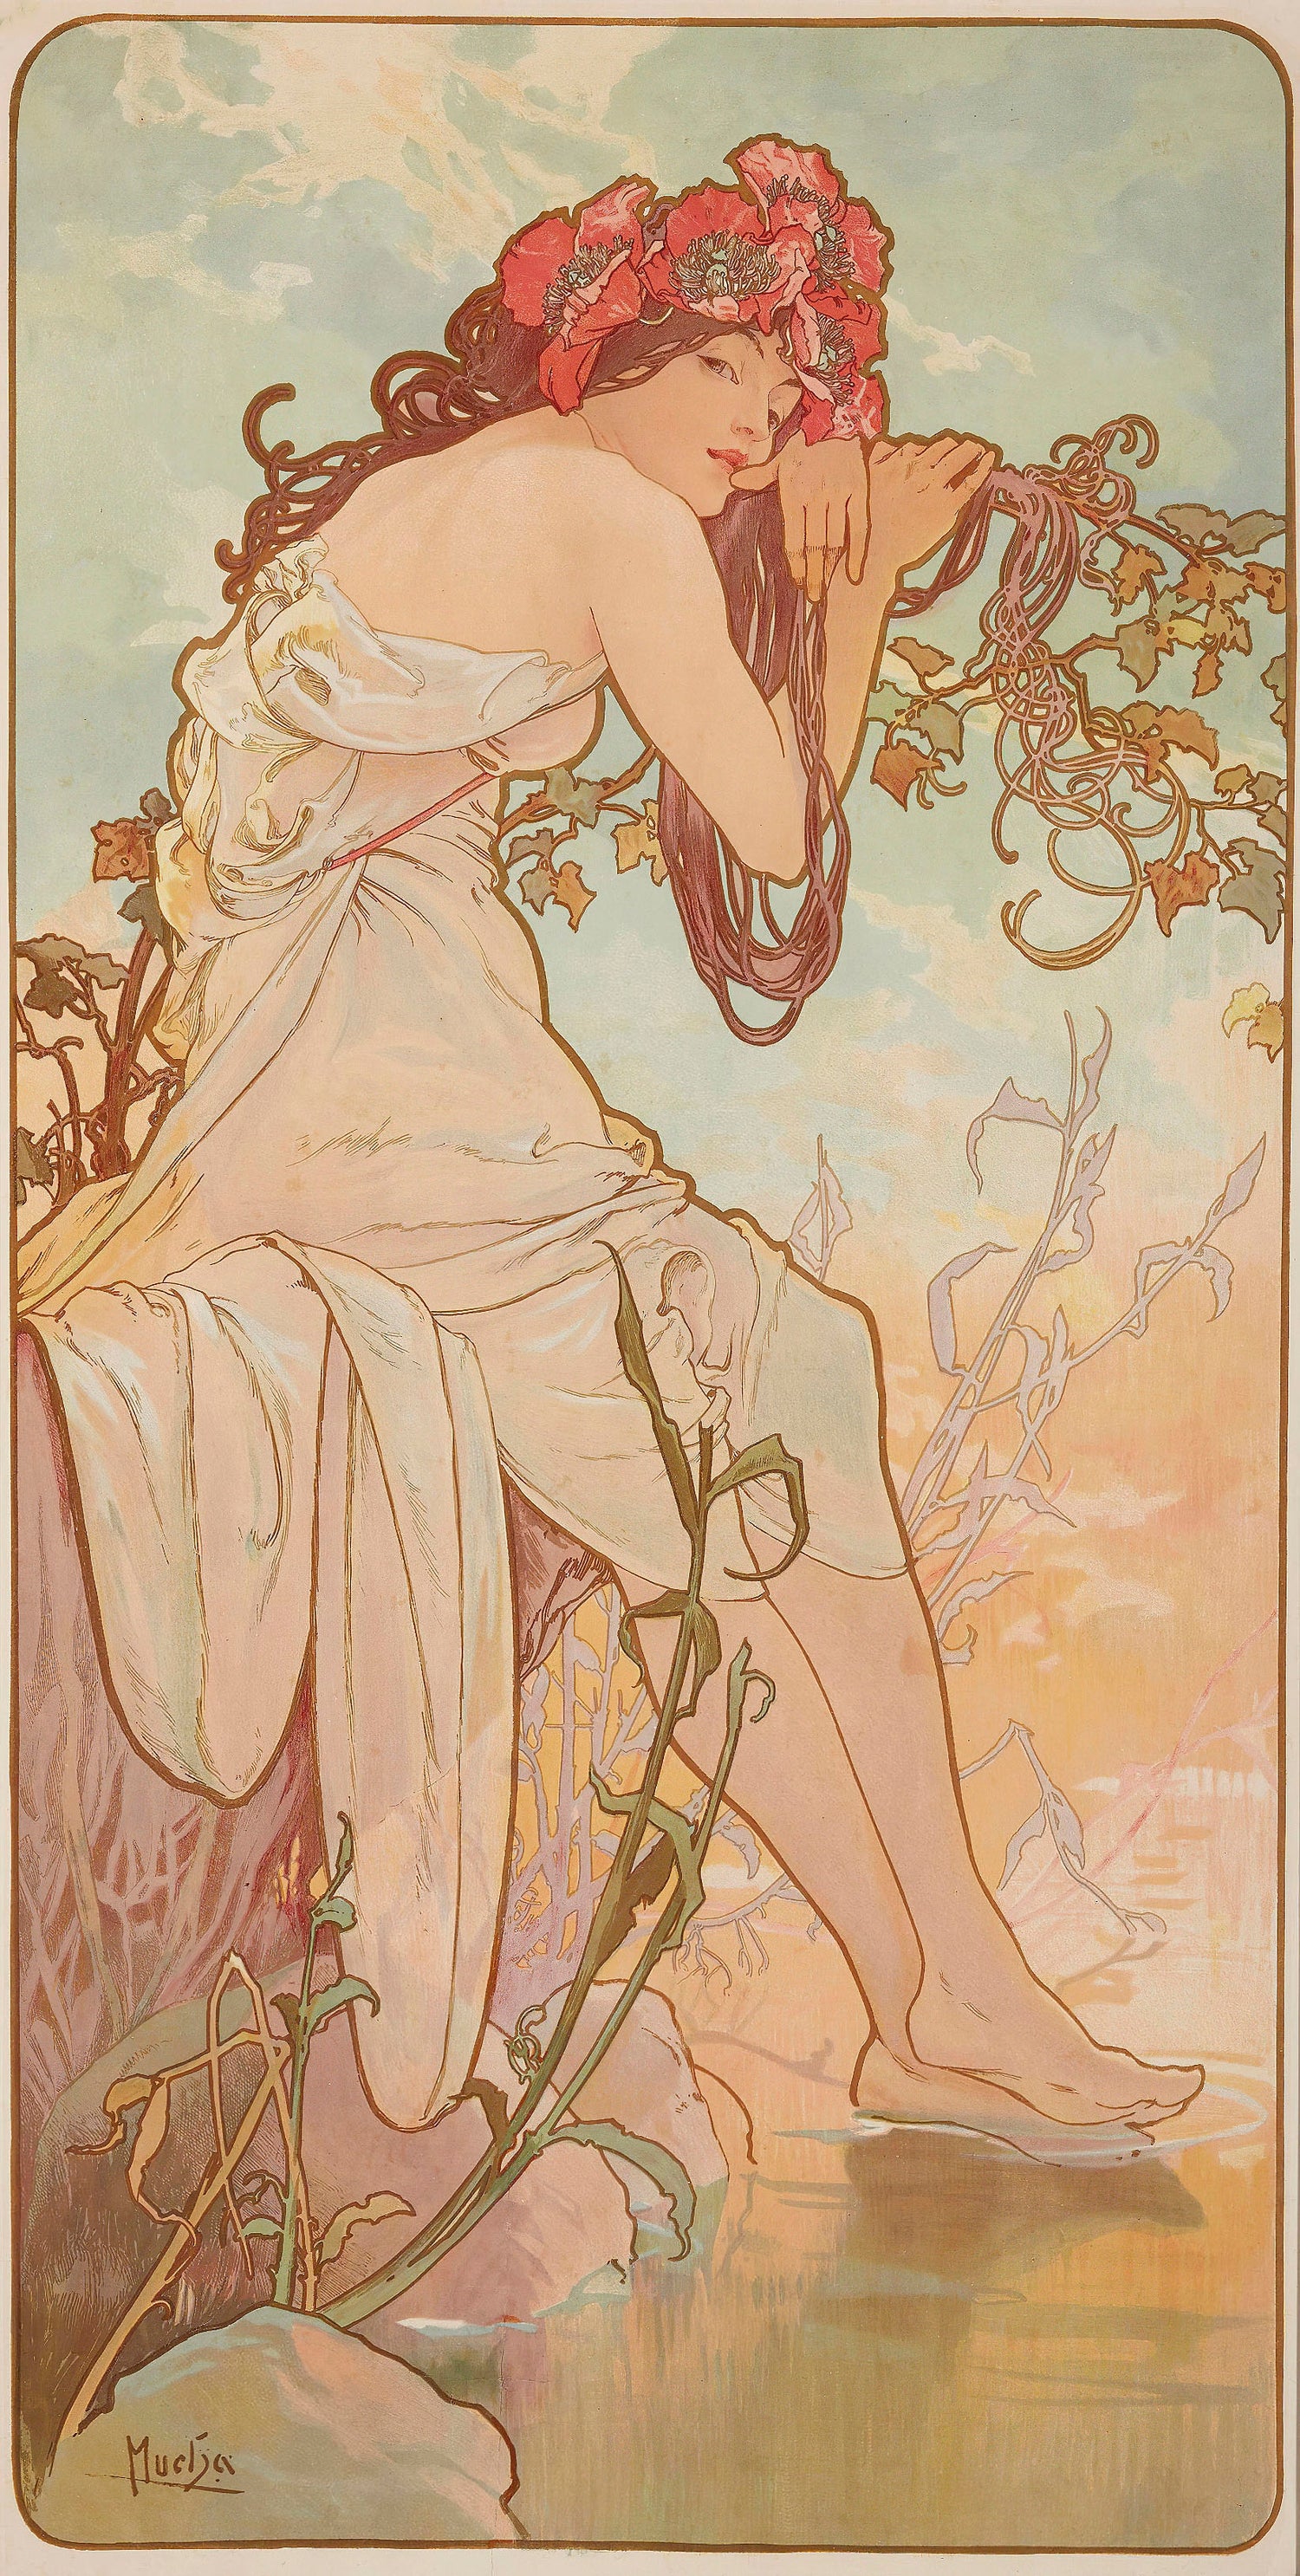 Autumn | Mucha "Seasons" prints (1890s) | Alphonse Mucha Posters, Prints, & Visual Artwork The Trumpet Shop   